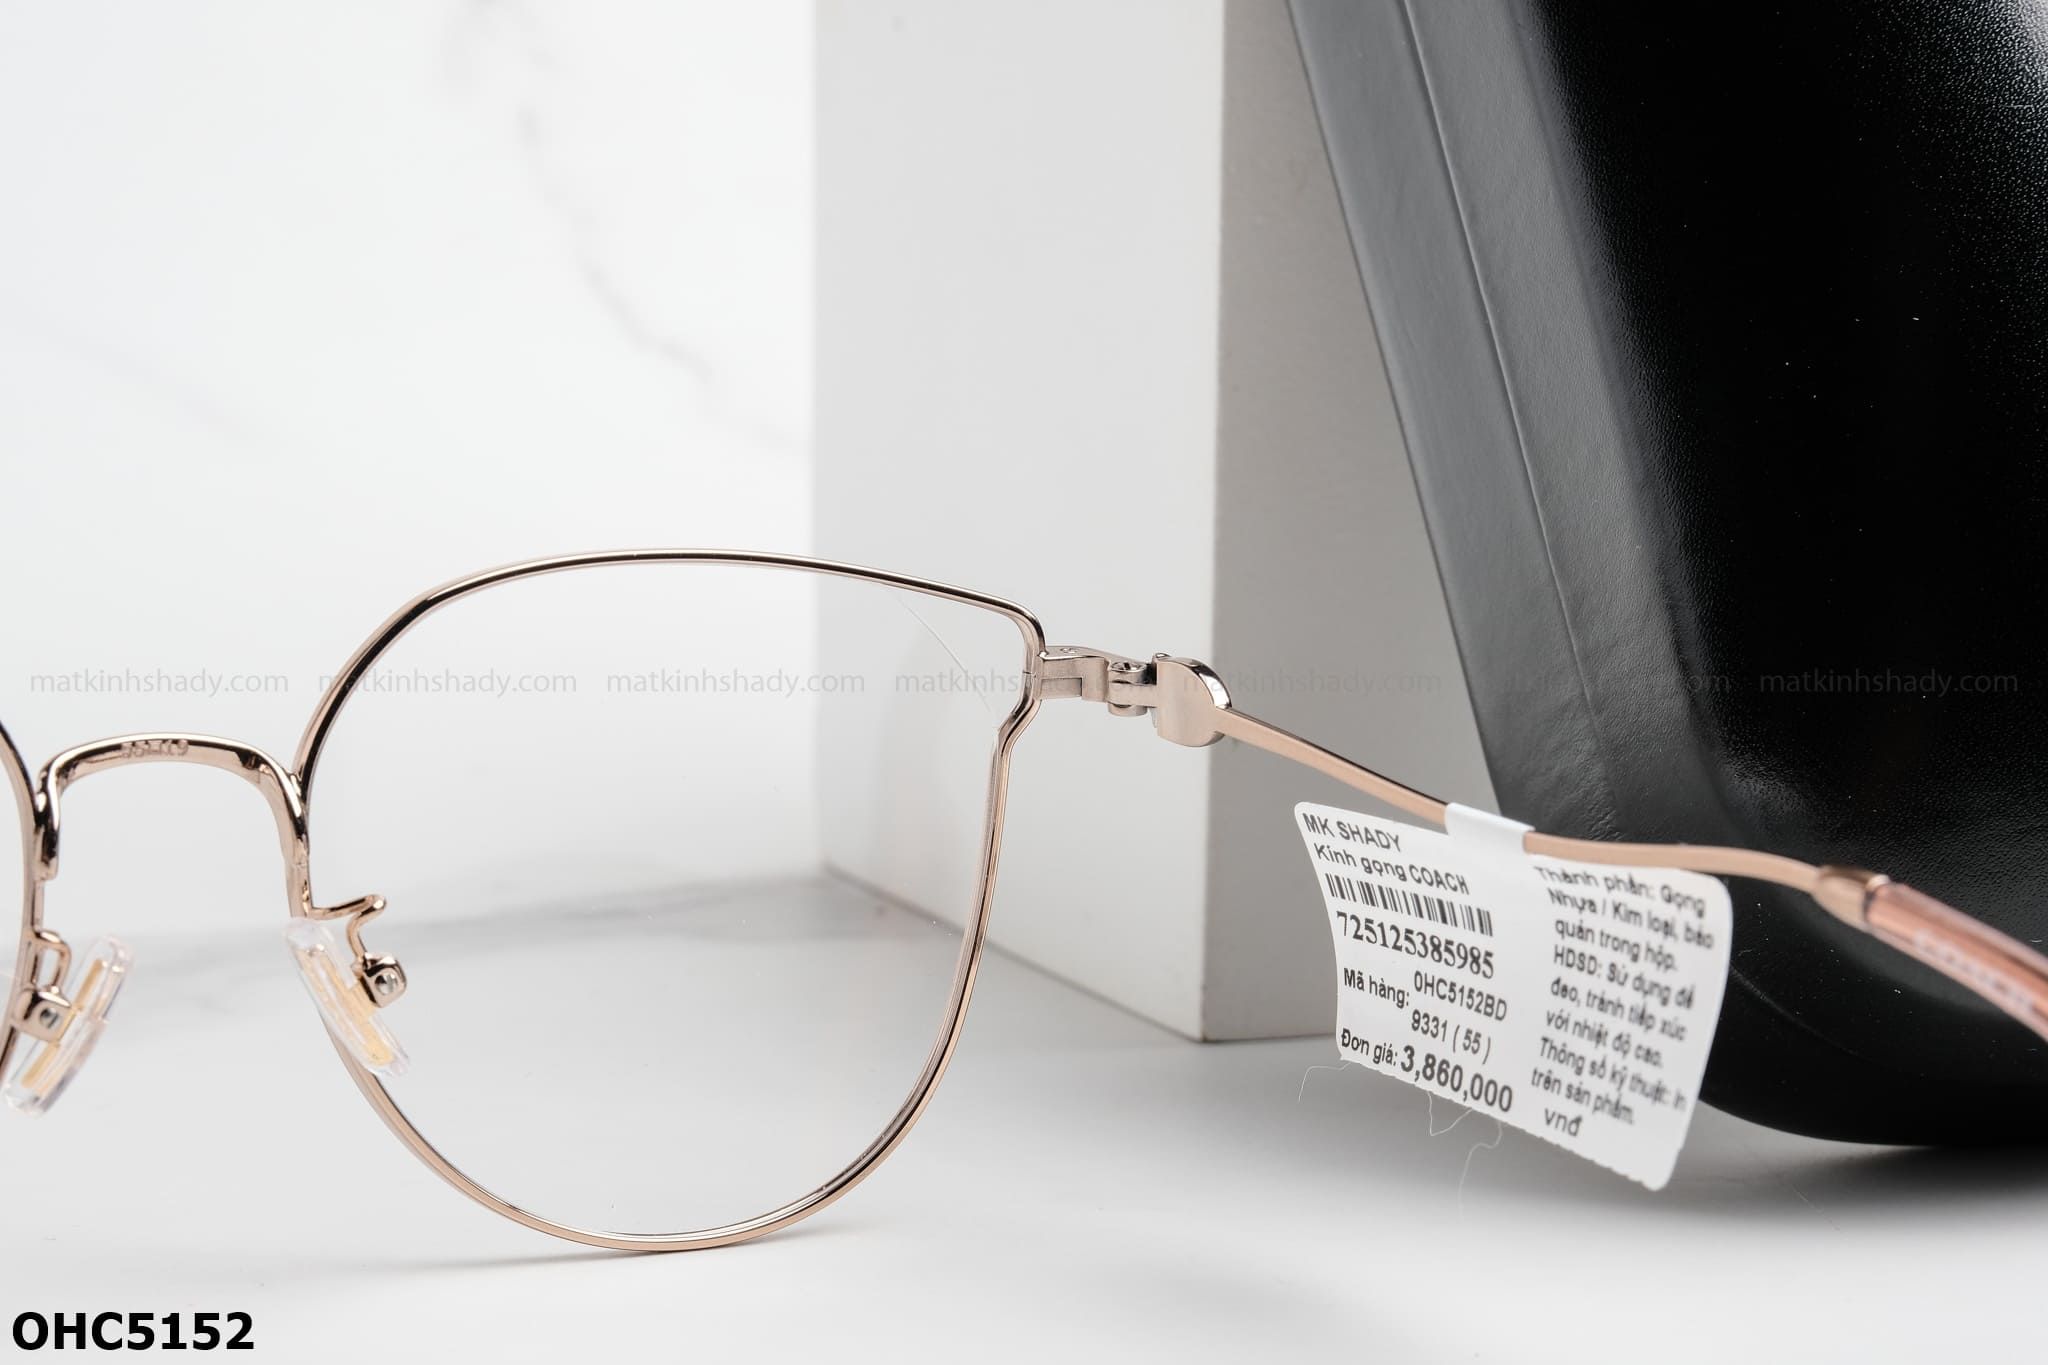  Coach Eyewear - Glasses - OHC5152 